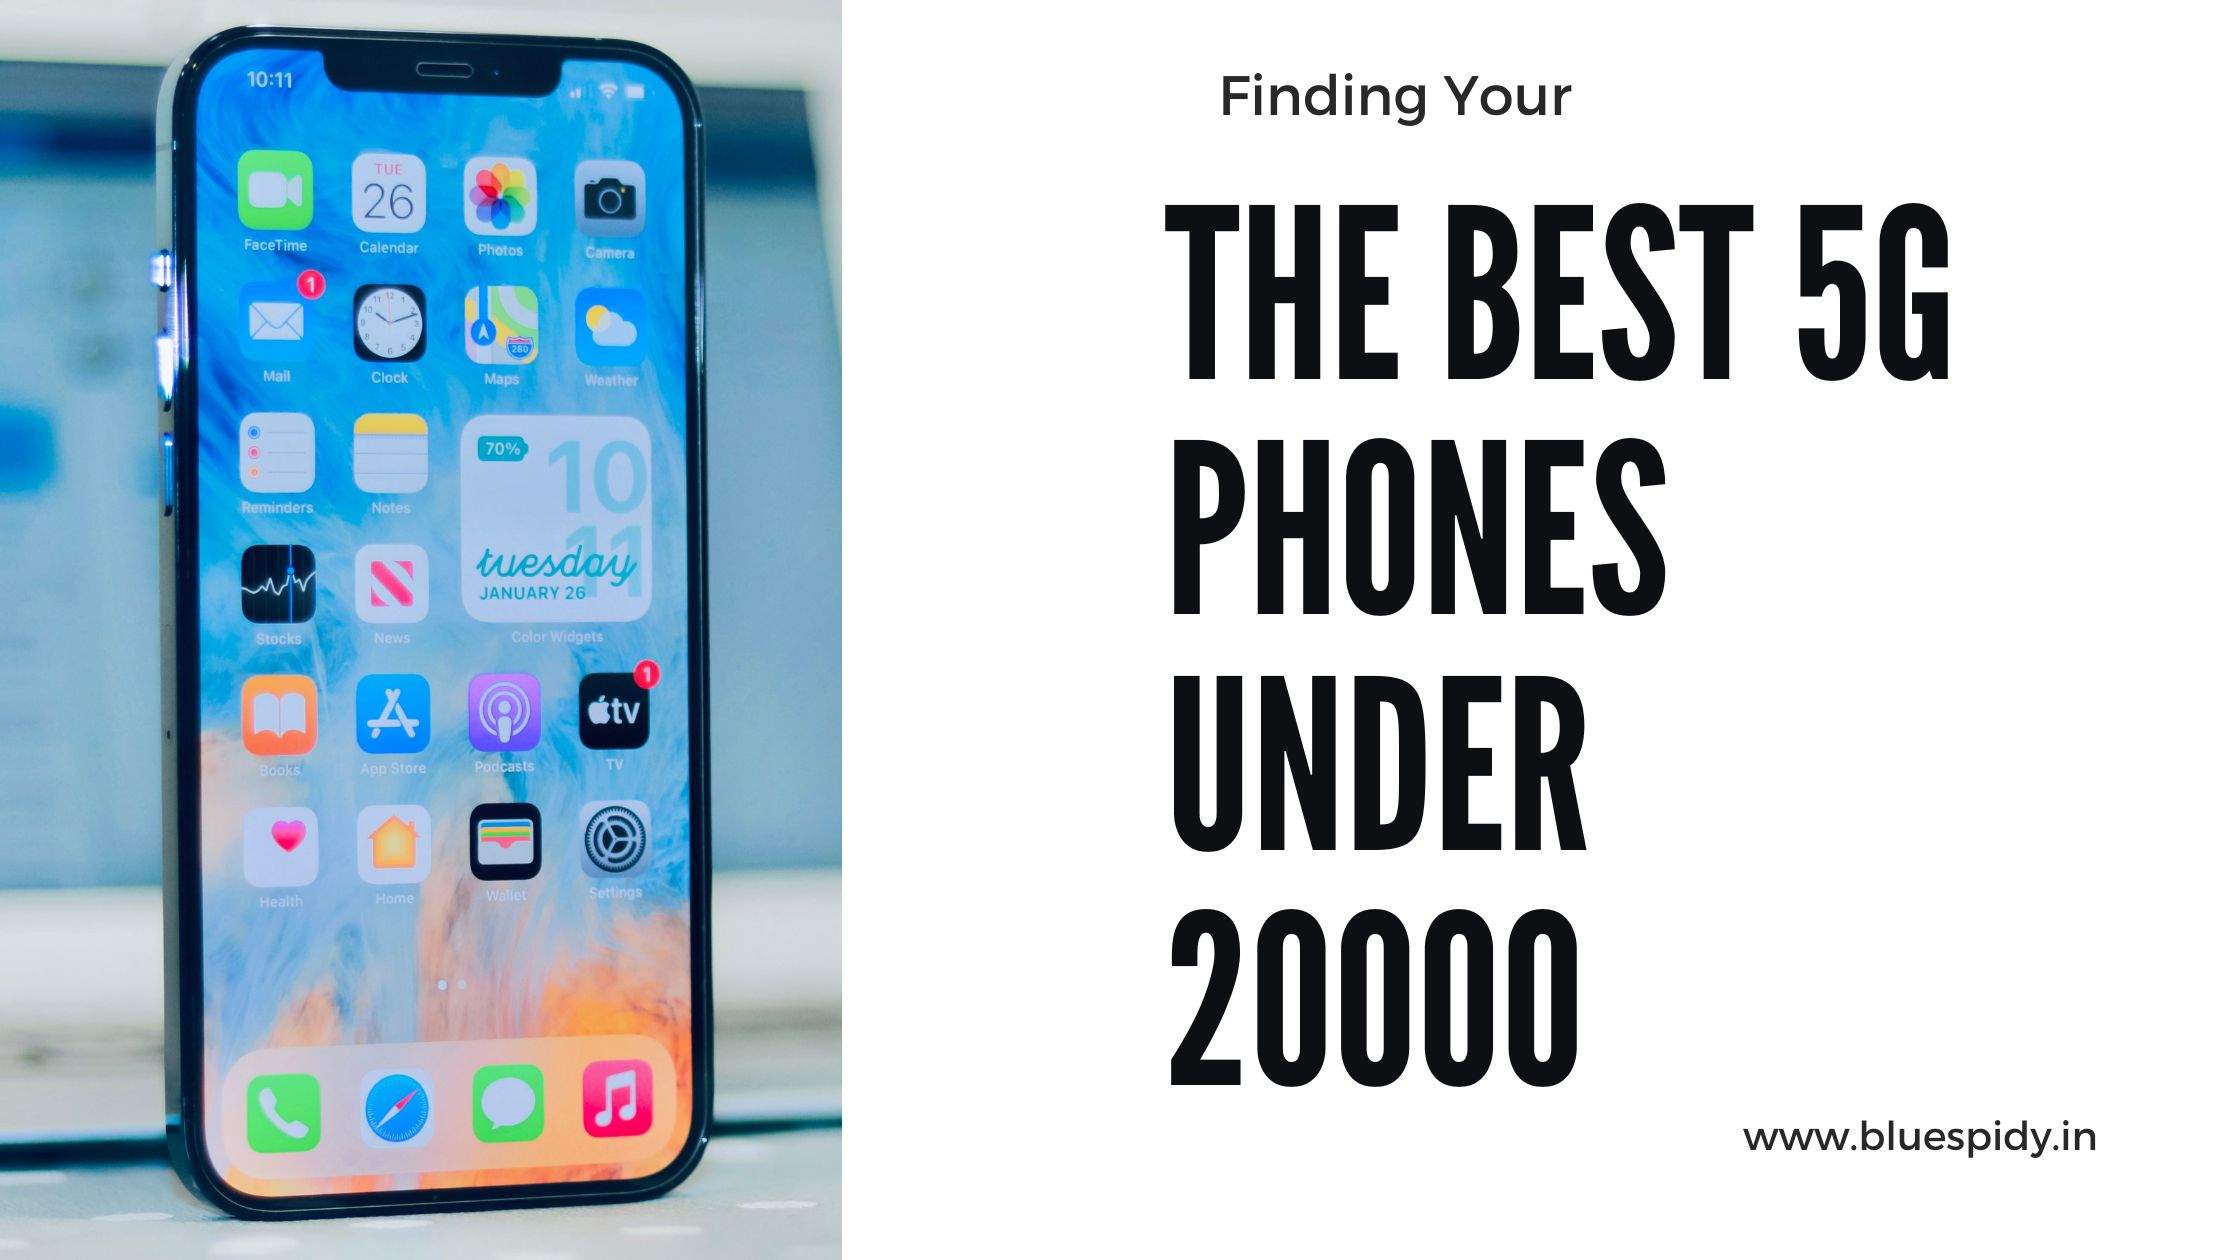 Best 5G Phones Under 20000